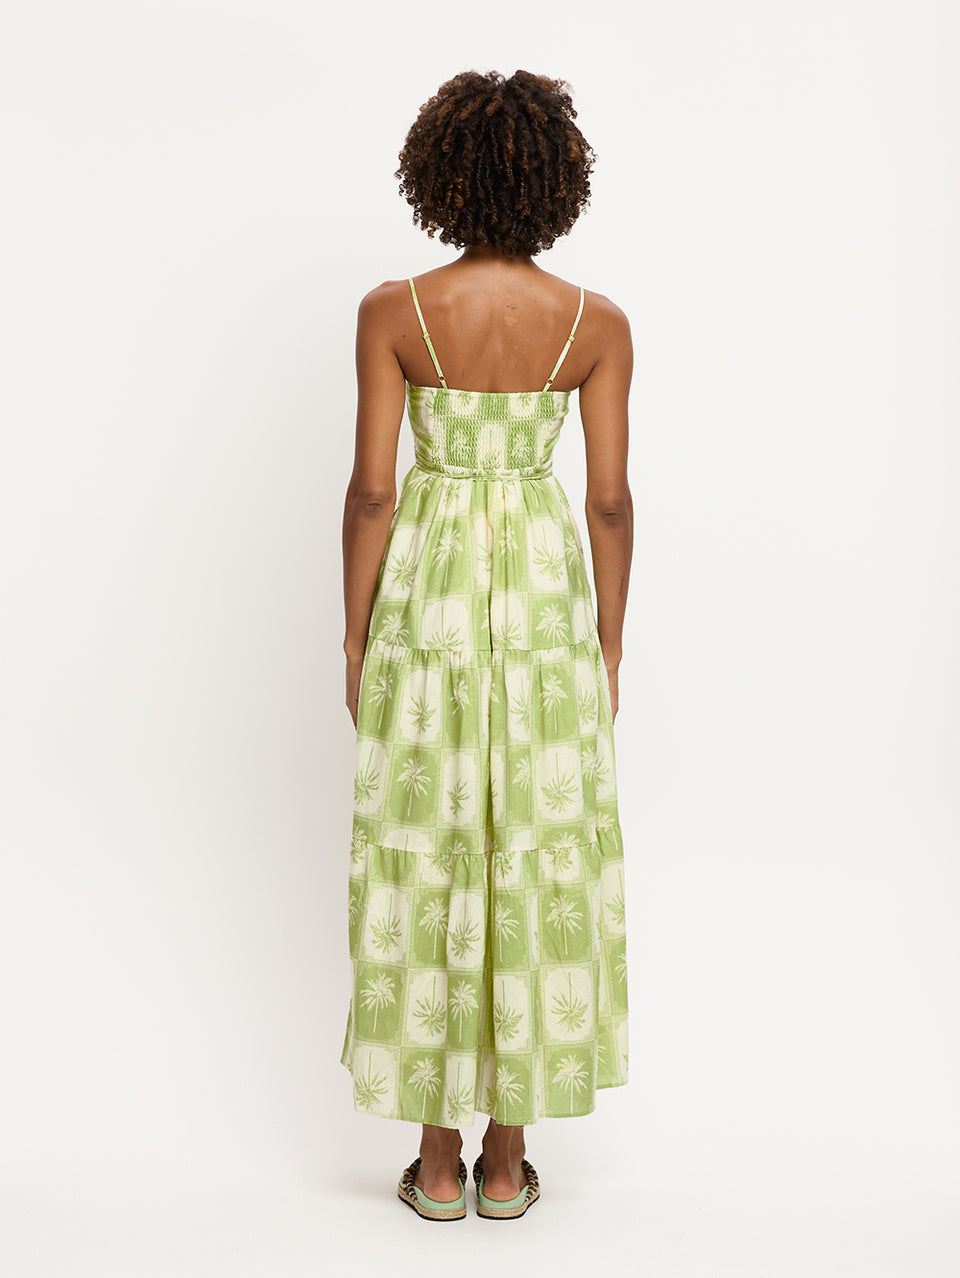 Paradiso Maxi Dress KIVARI | Model wears palm tree printed maxi dress back view